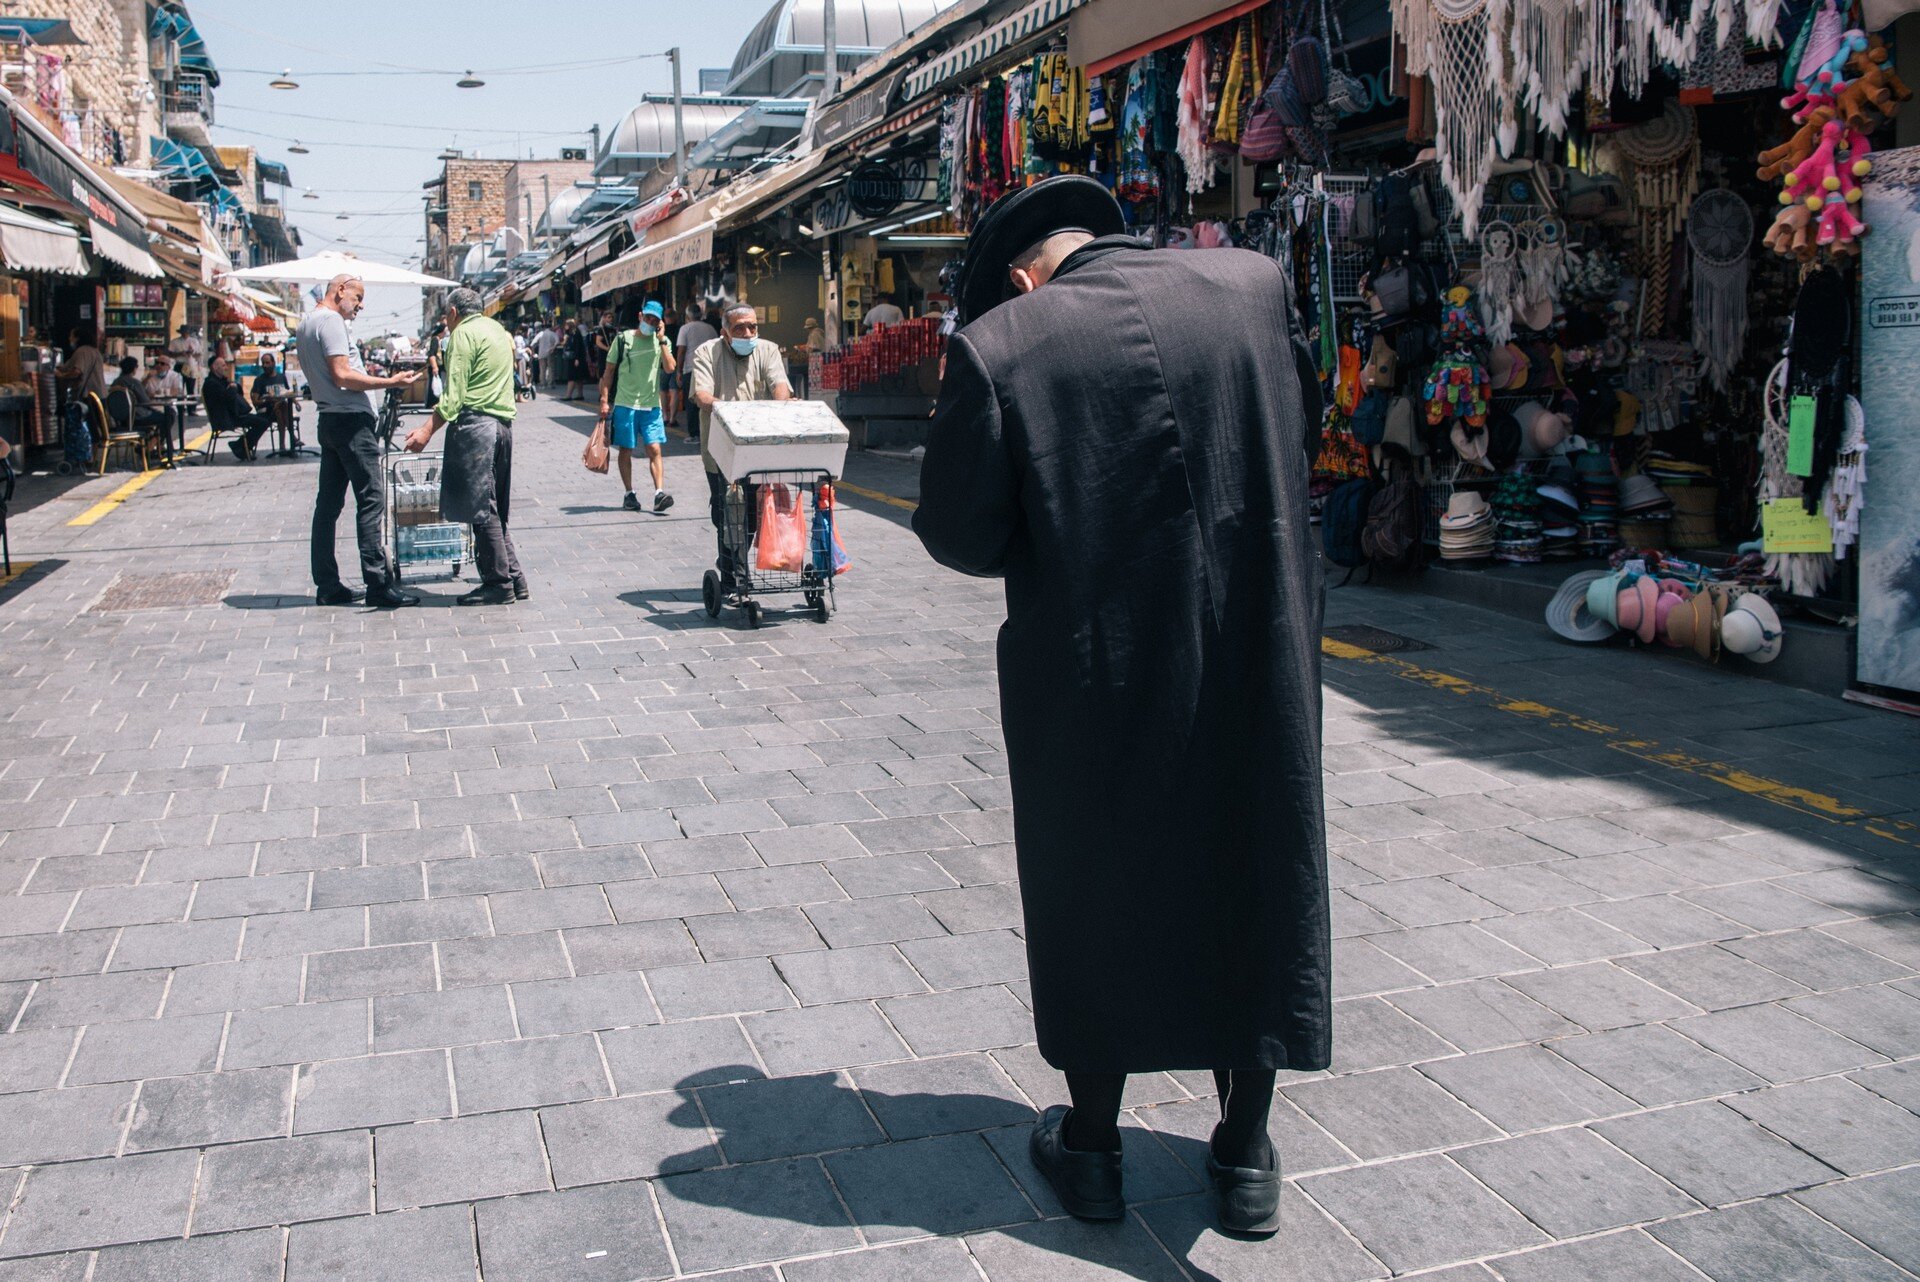 June 2. Israel, Jerusalem. Mahane Yehuda market